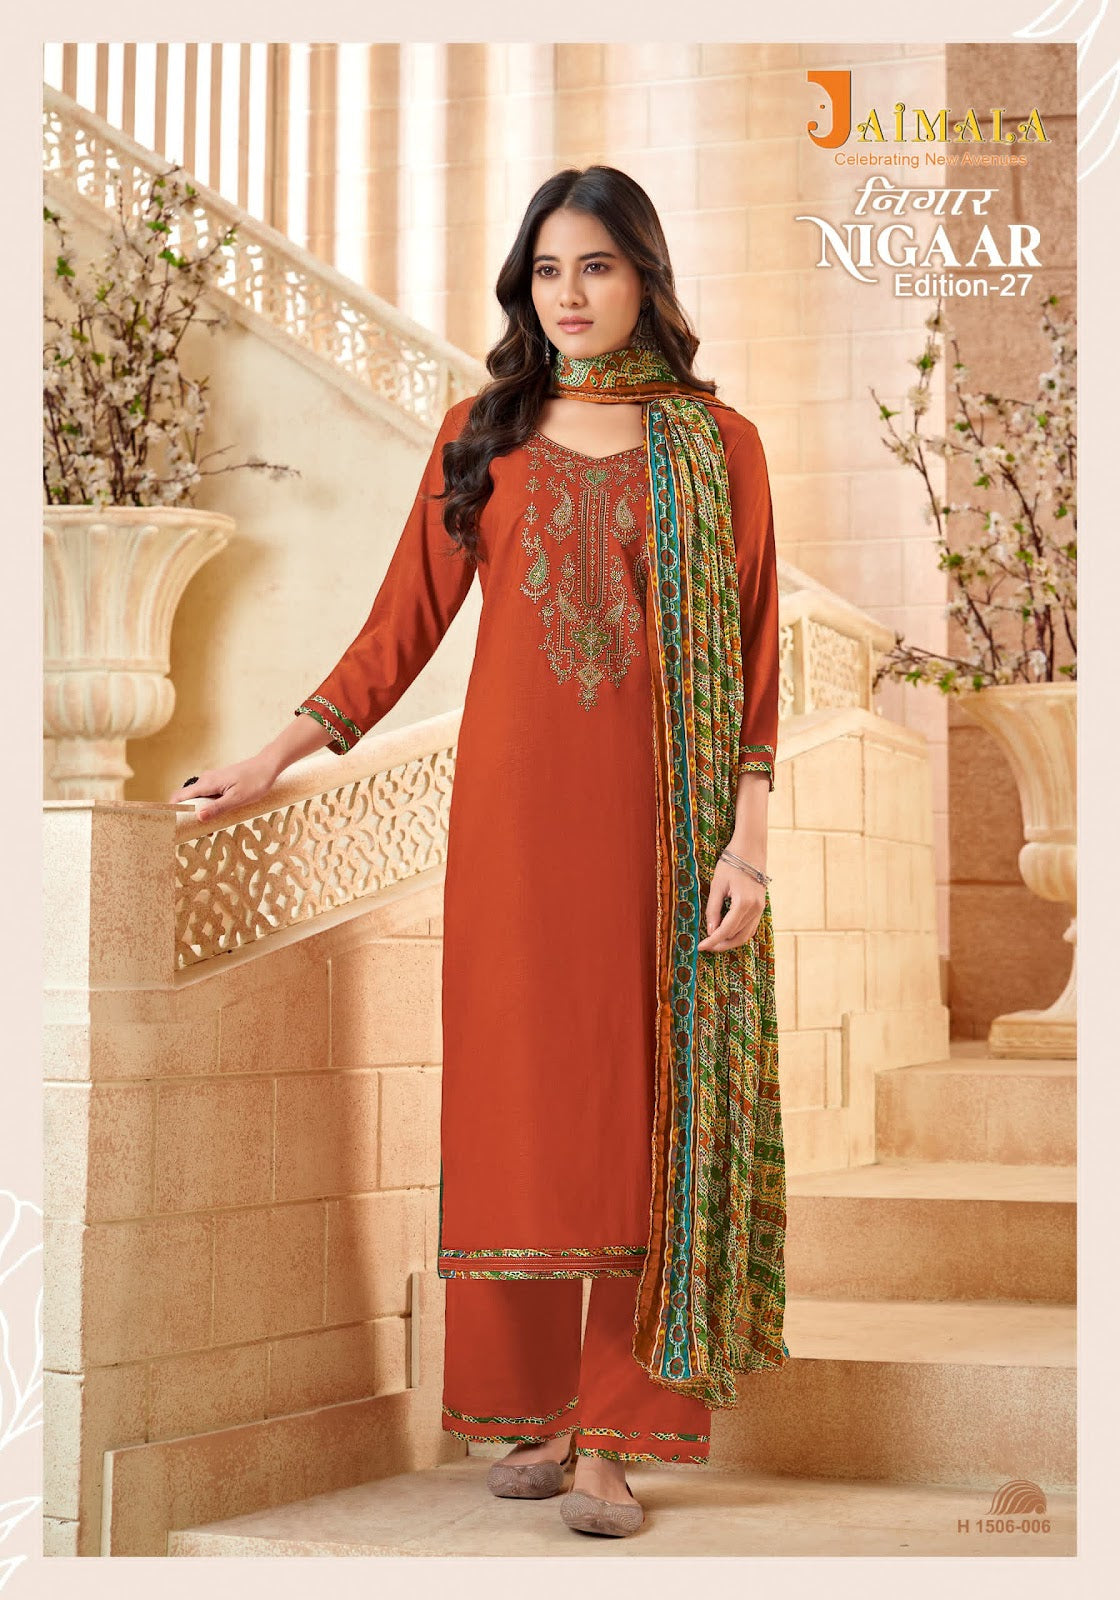 Nigaar Edition 27 Jaimala Reyon Plazzo Style Suits Wholesale Price